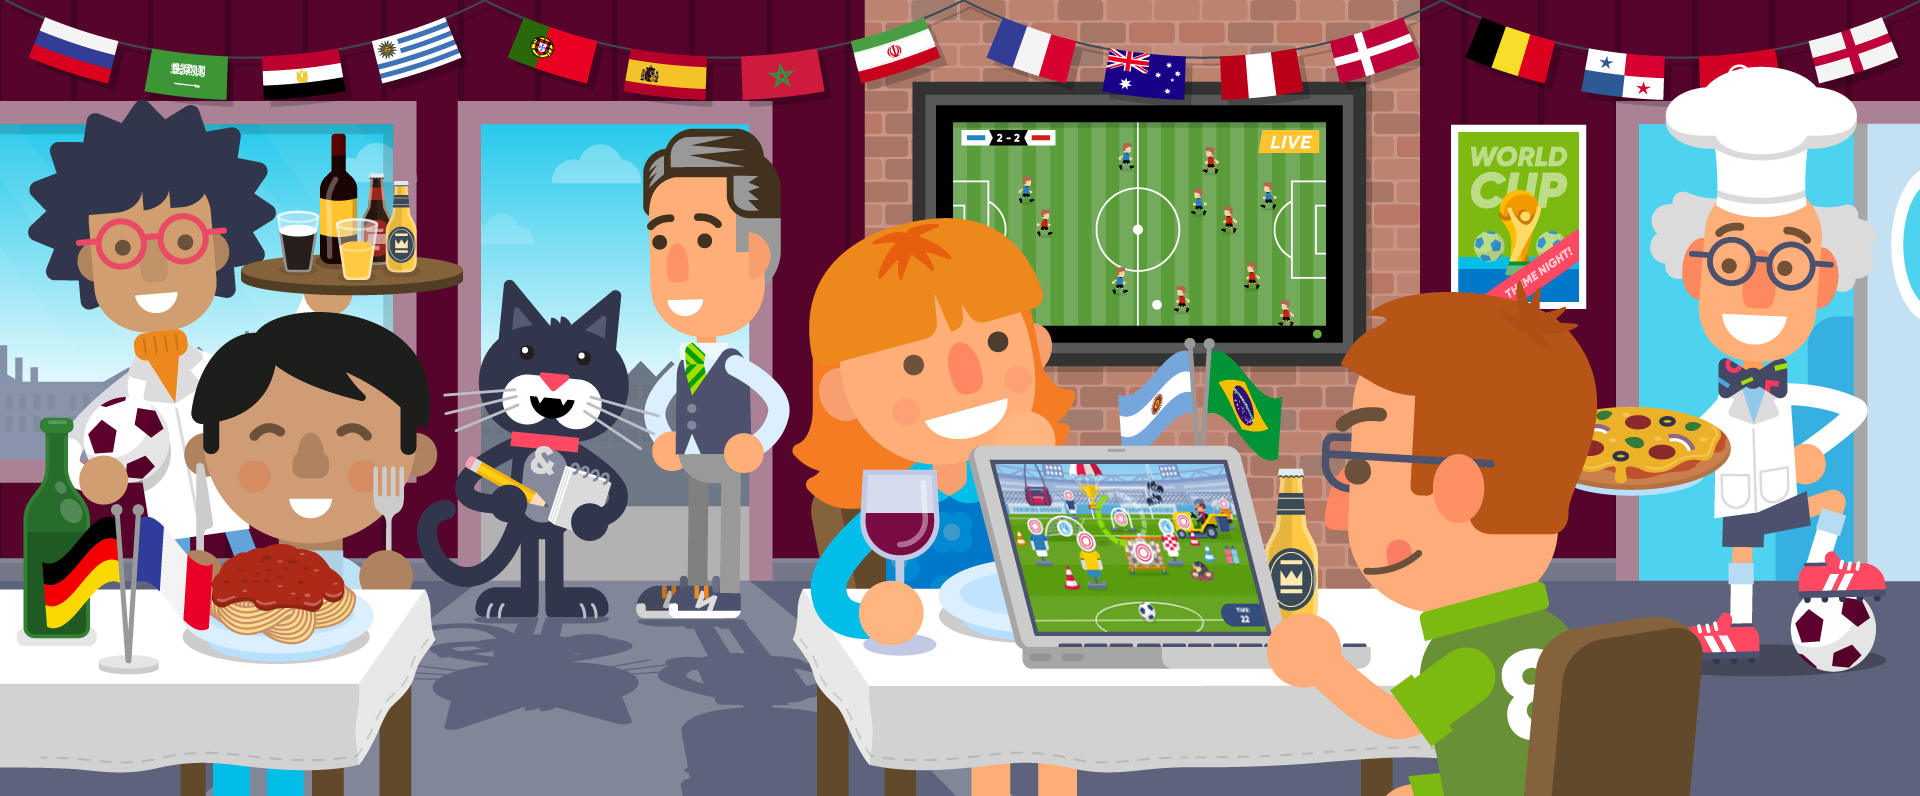 World Cup Restaurant Promotions Blog Header